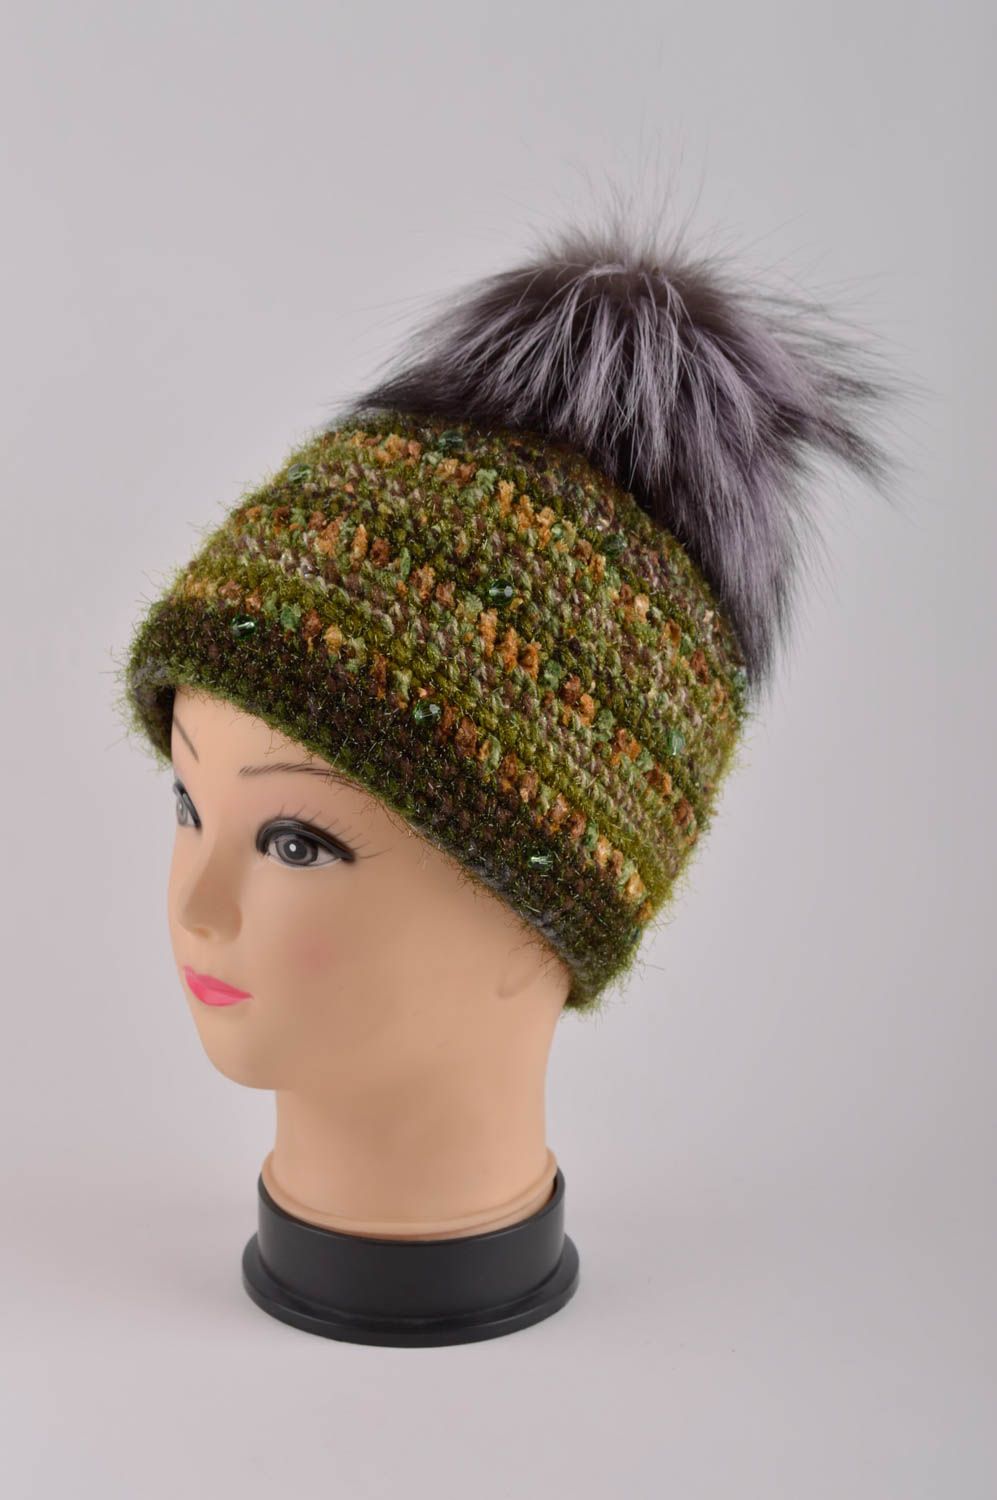 Handmade winter hat crochet hat womens hat designer accessories gifts for girls photo 2